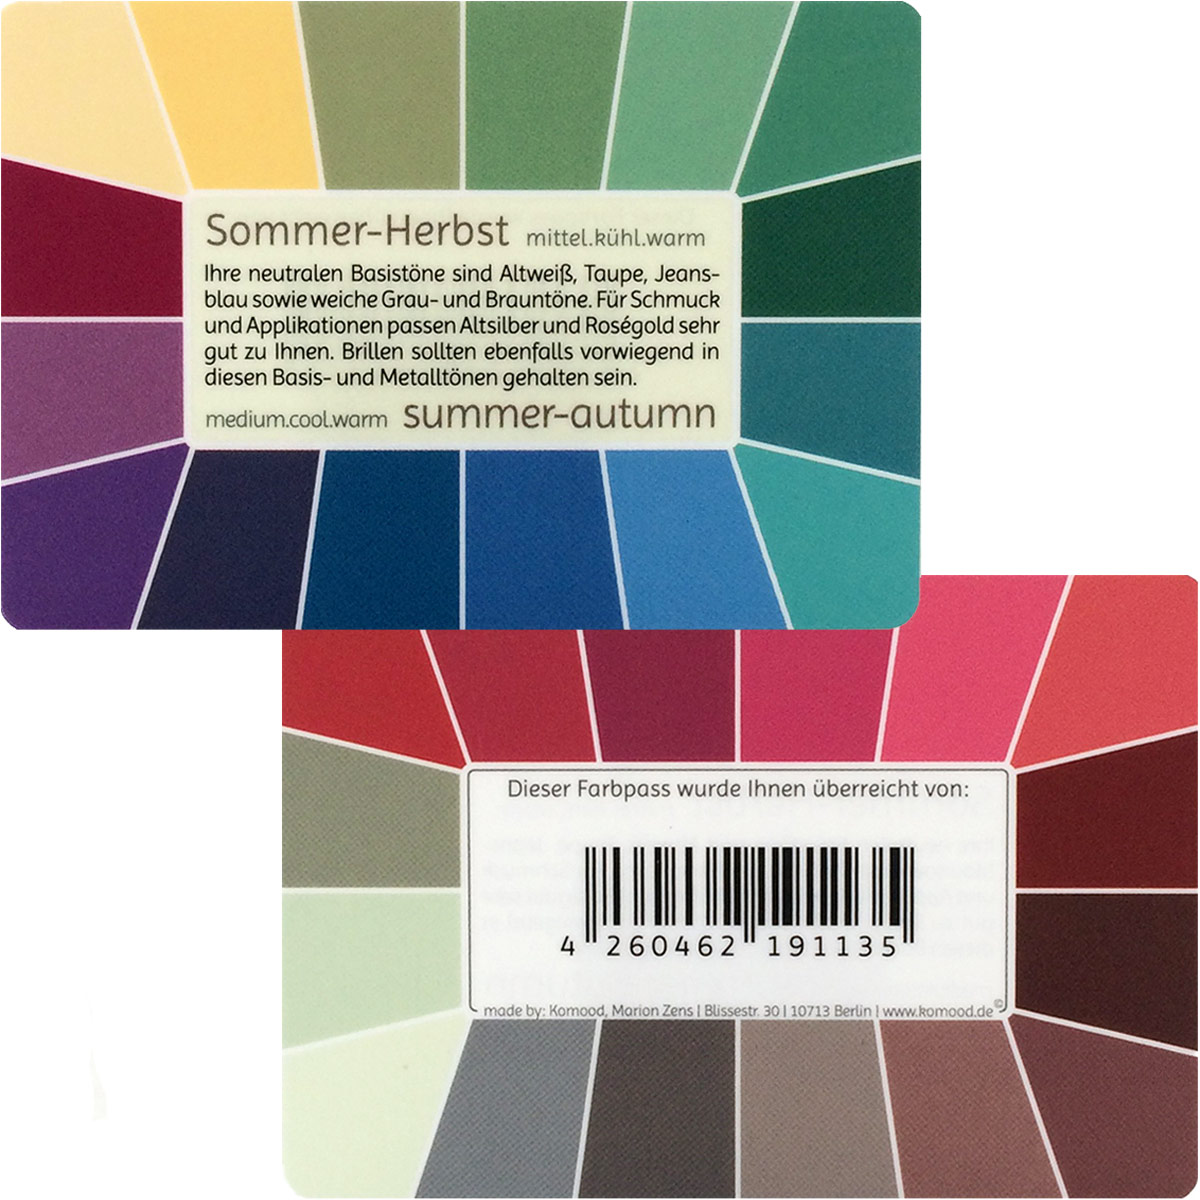 Farbpass Sommer-Herbst - Memo, 32 Farben